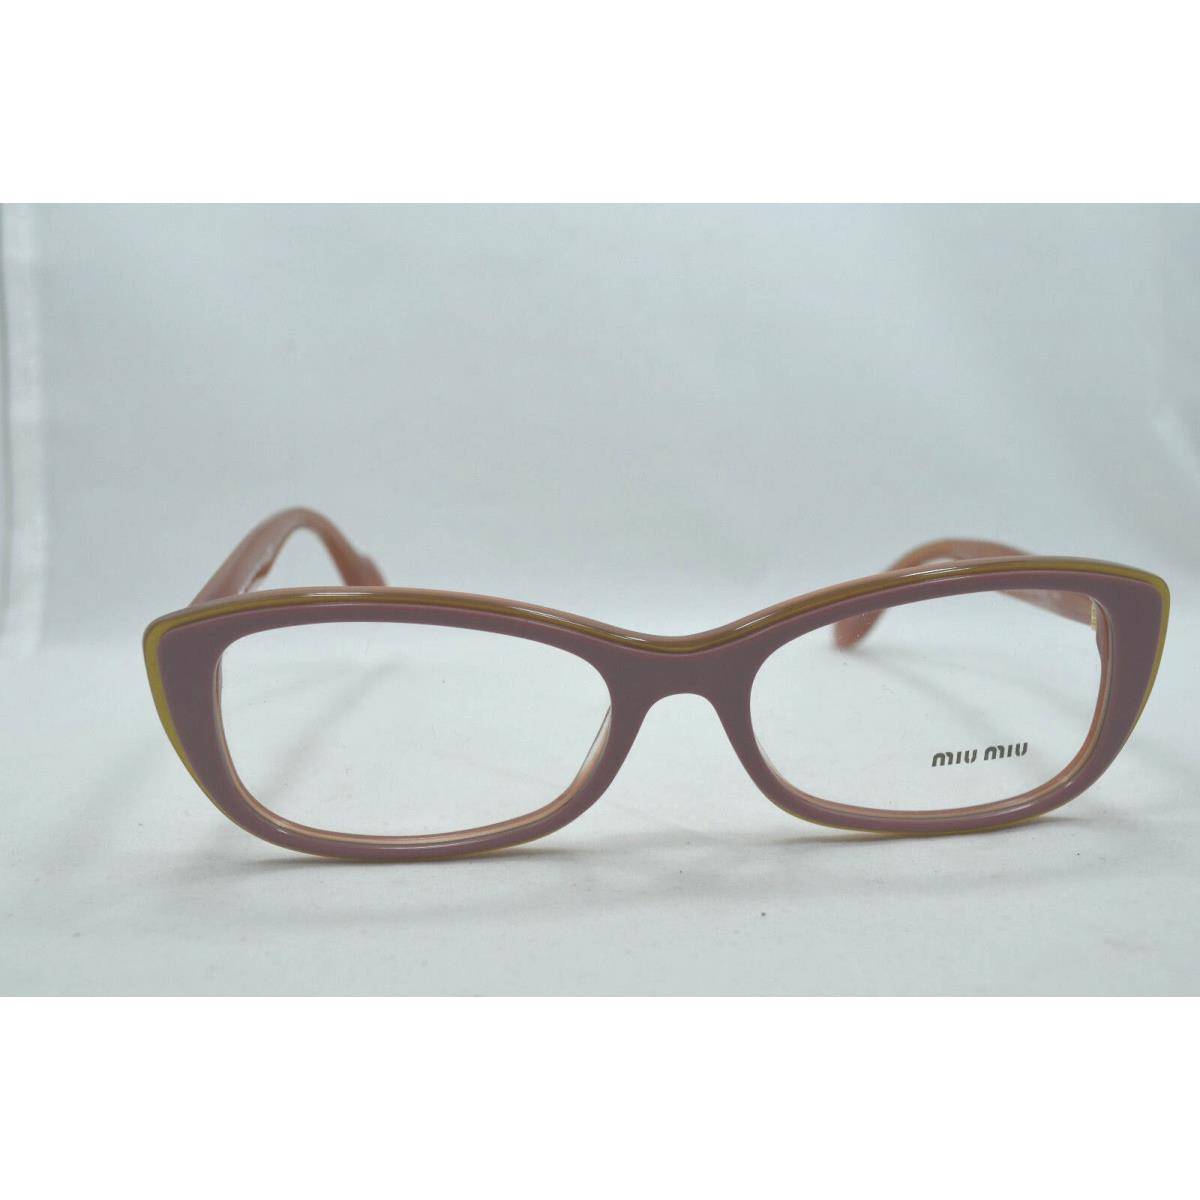 Miu Miu eyeglasses  - Multi-Color Frame 0